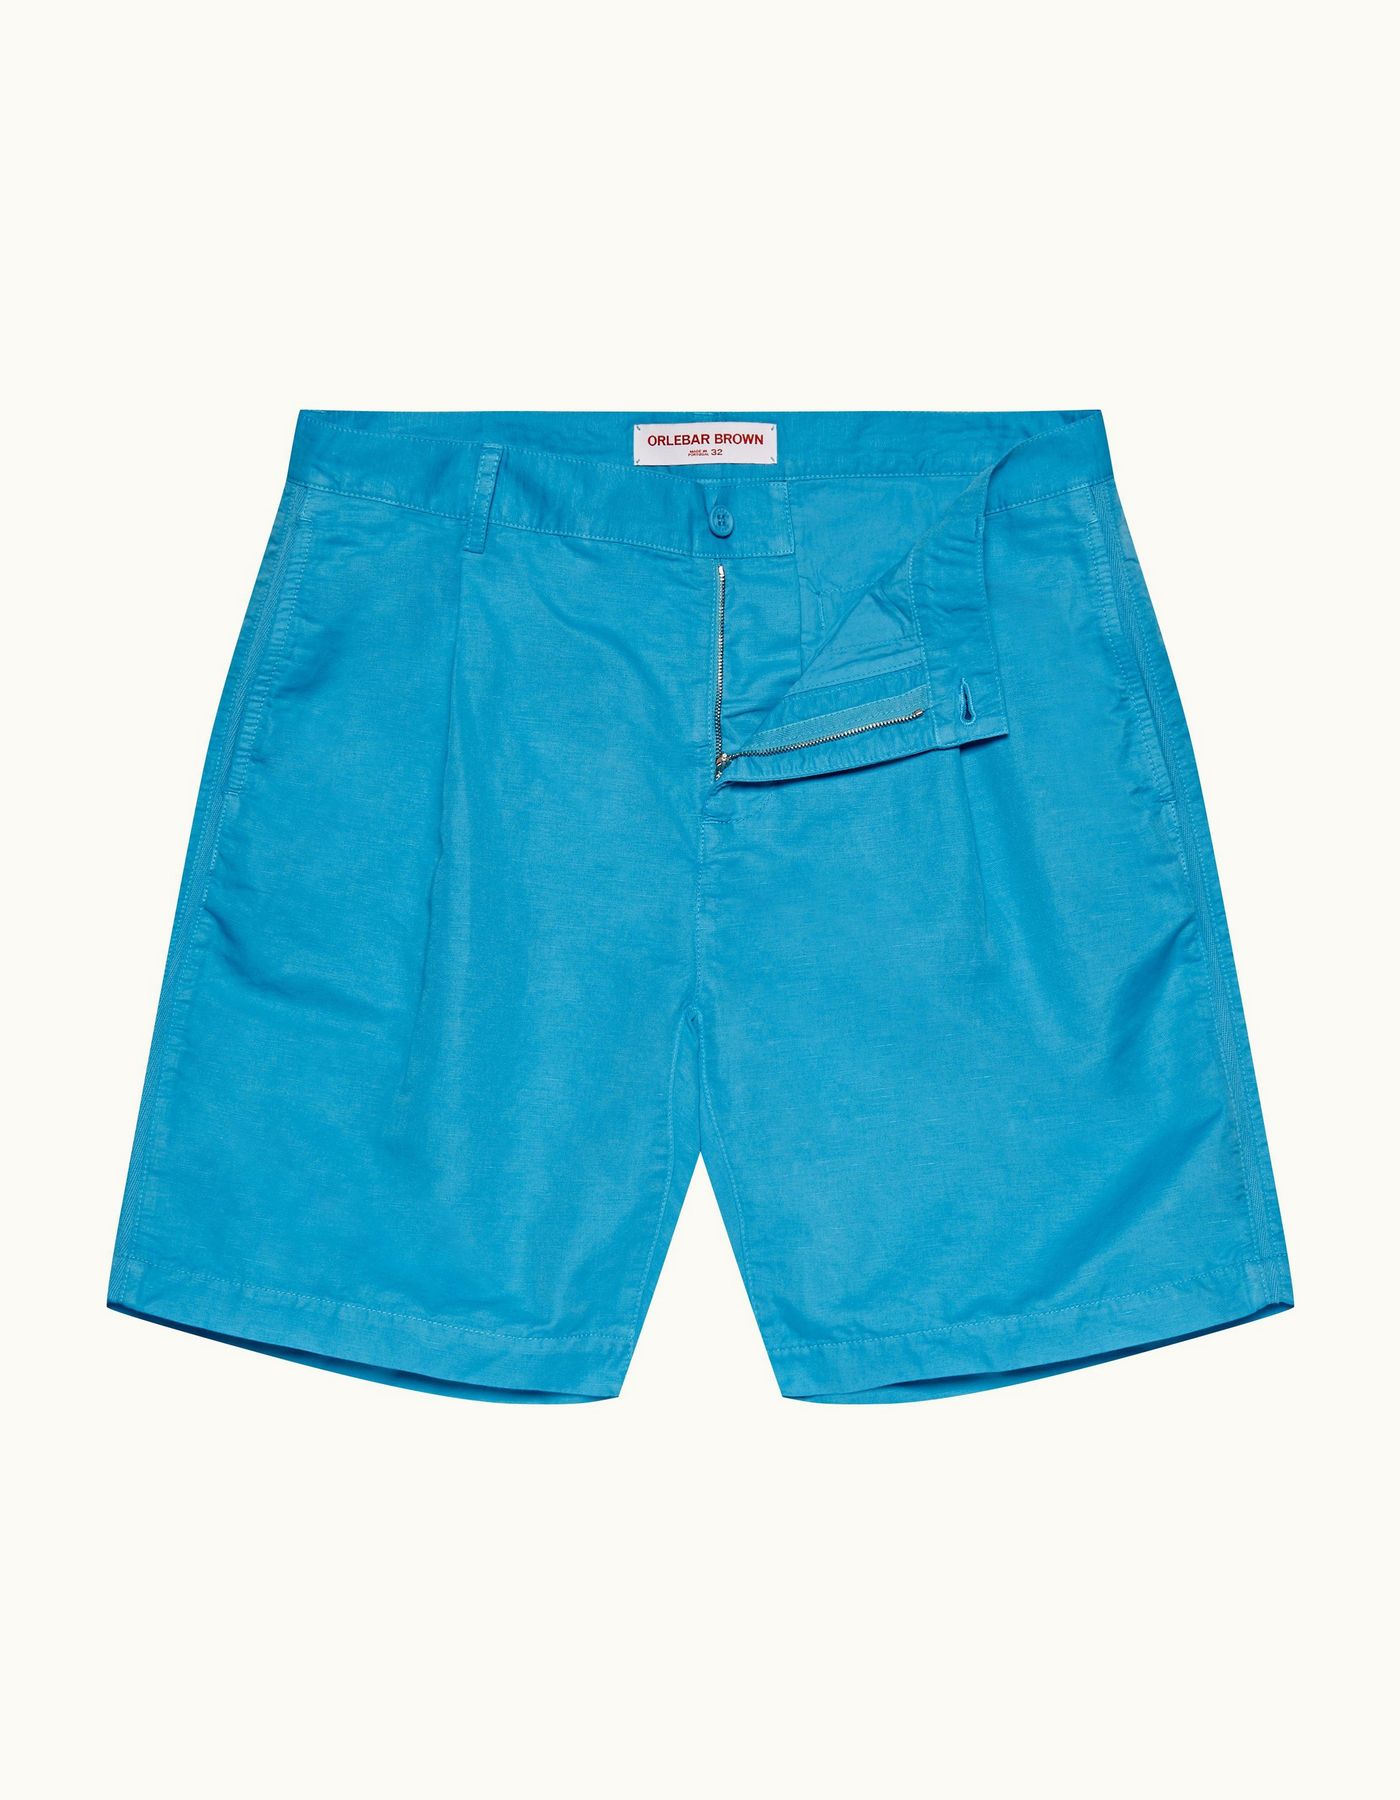 Searose - Mens Cerulean Tailored Fit Garment Dye Shorts